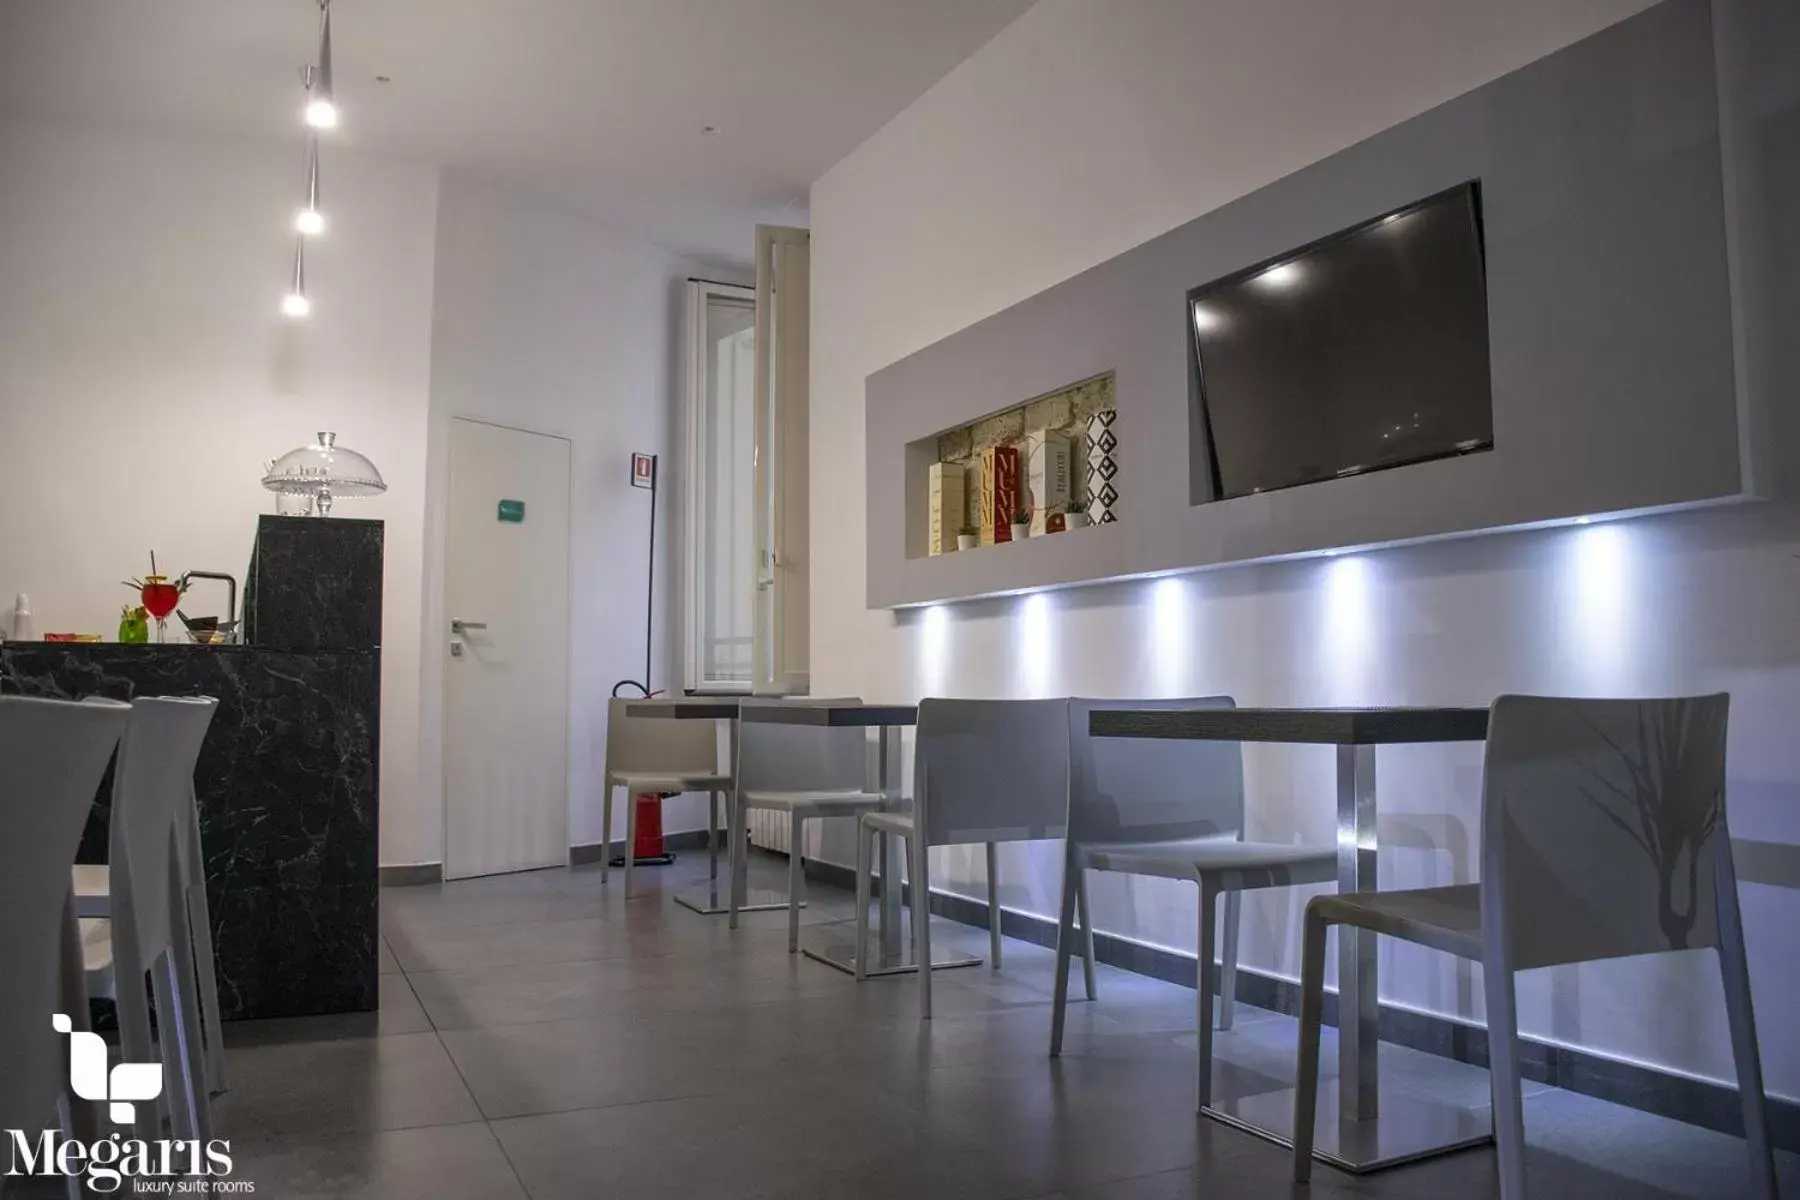 Seating area, Lounge/Bar in Megaris Luxury Suite Rooms